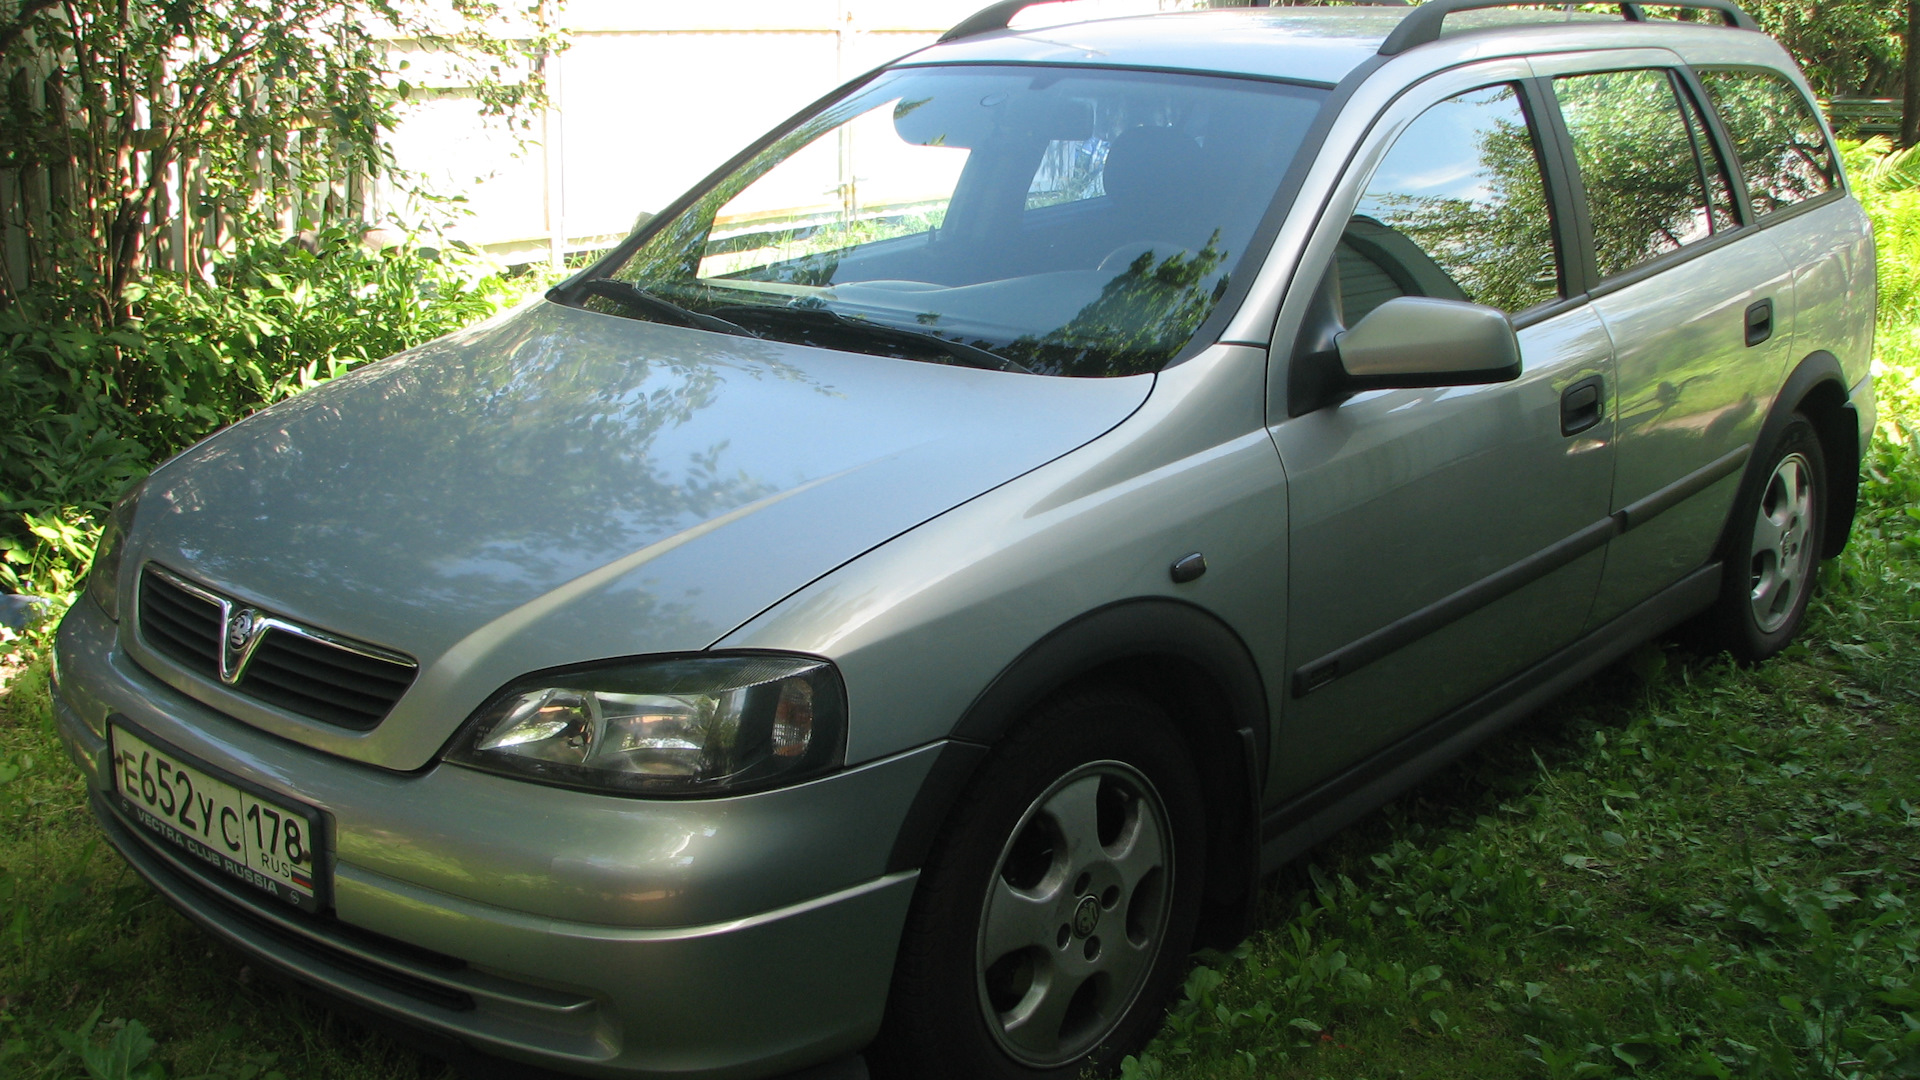 2000 год на продажу. Opel Astra 2000. Opel Astra 1.6 2000. Opel Astra g 2000.